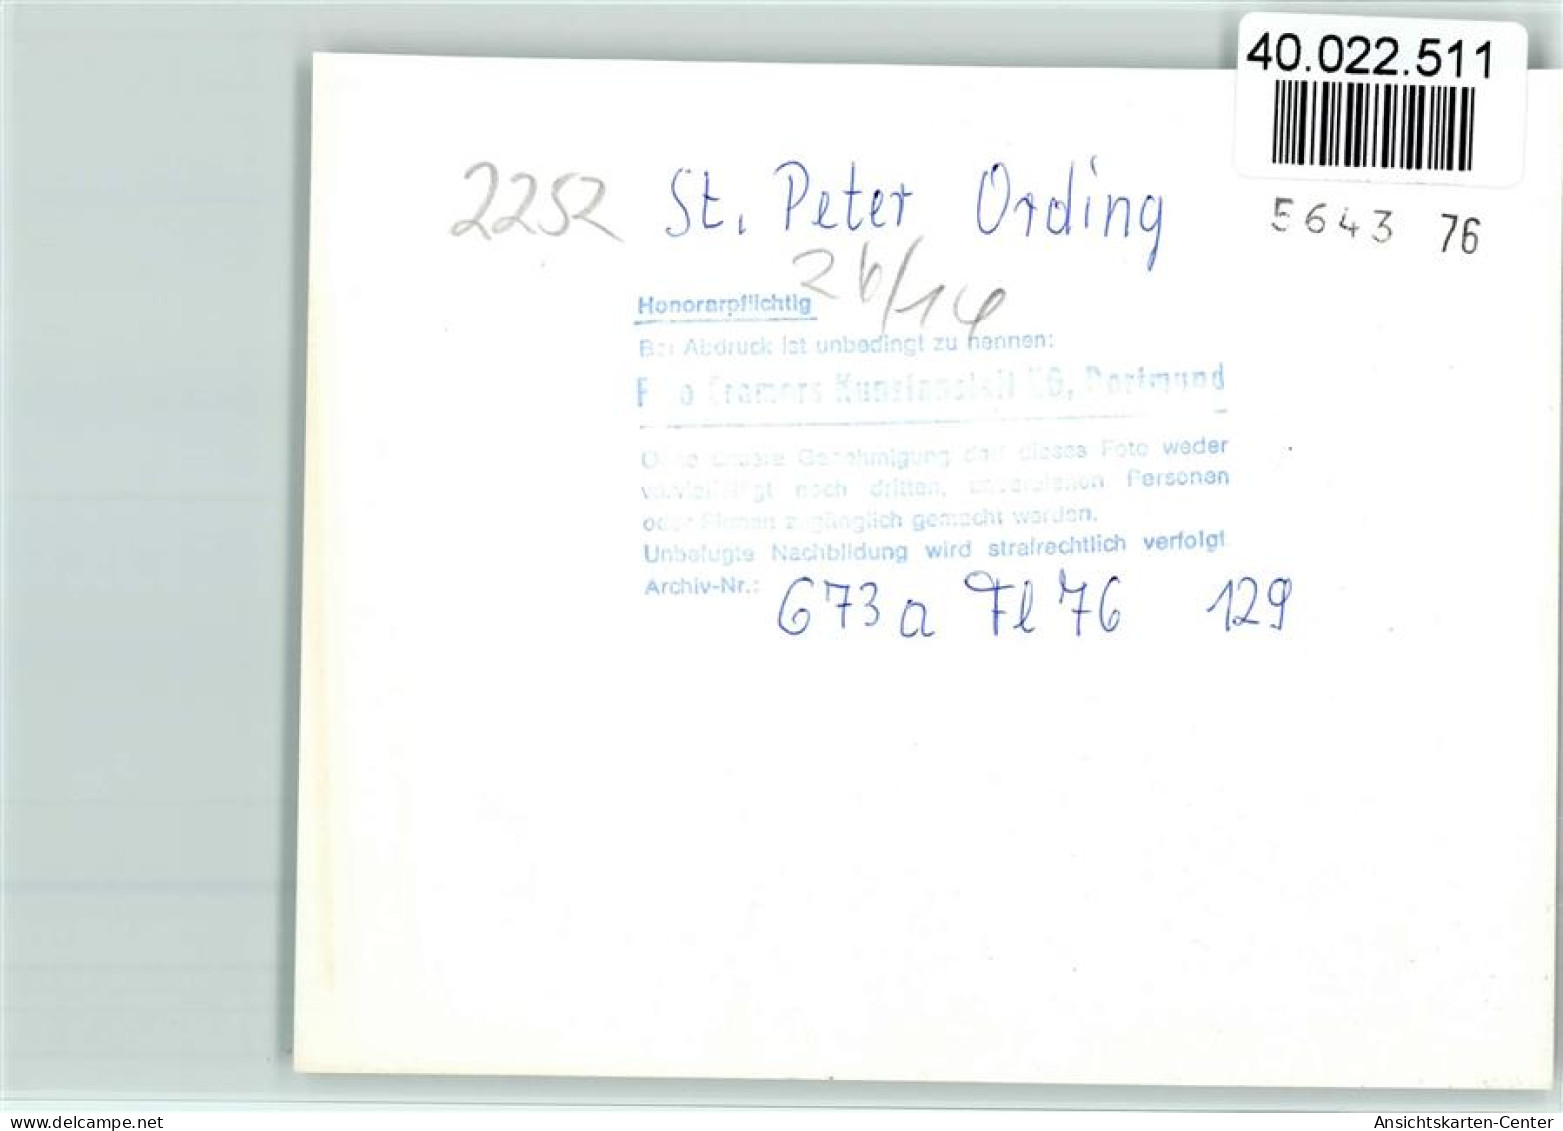 40022511 - St Peter-Ording - St. Peter-Ording